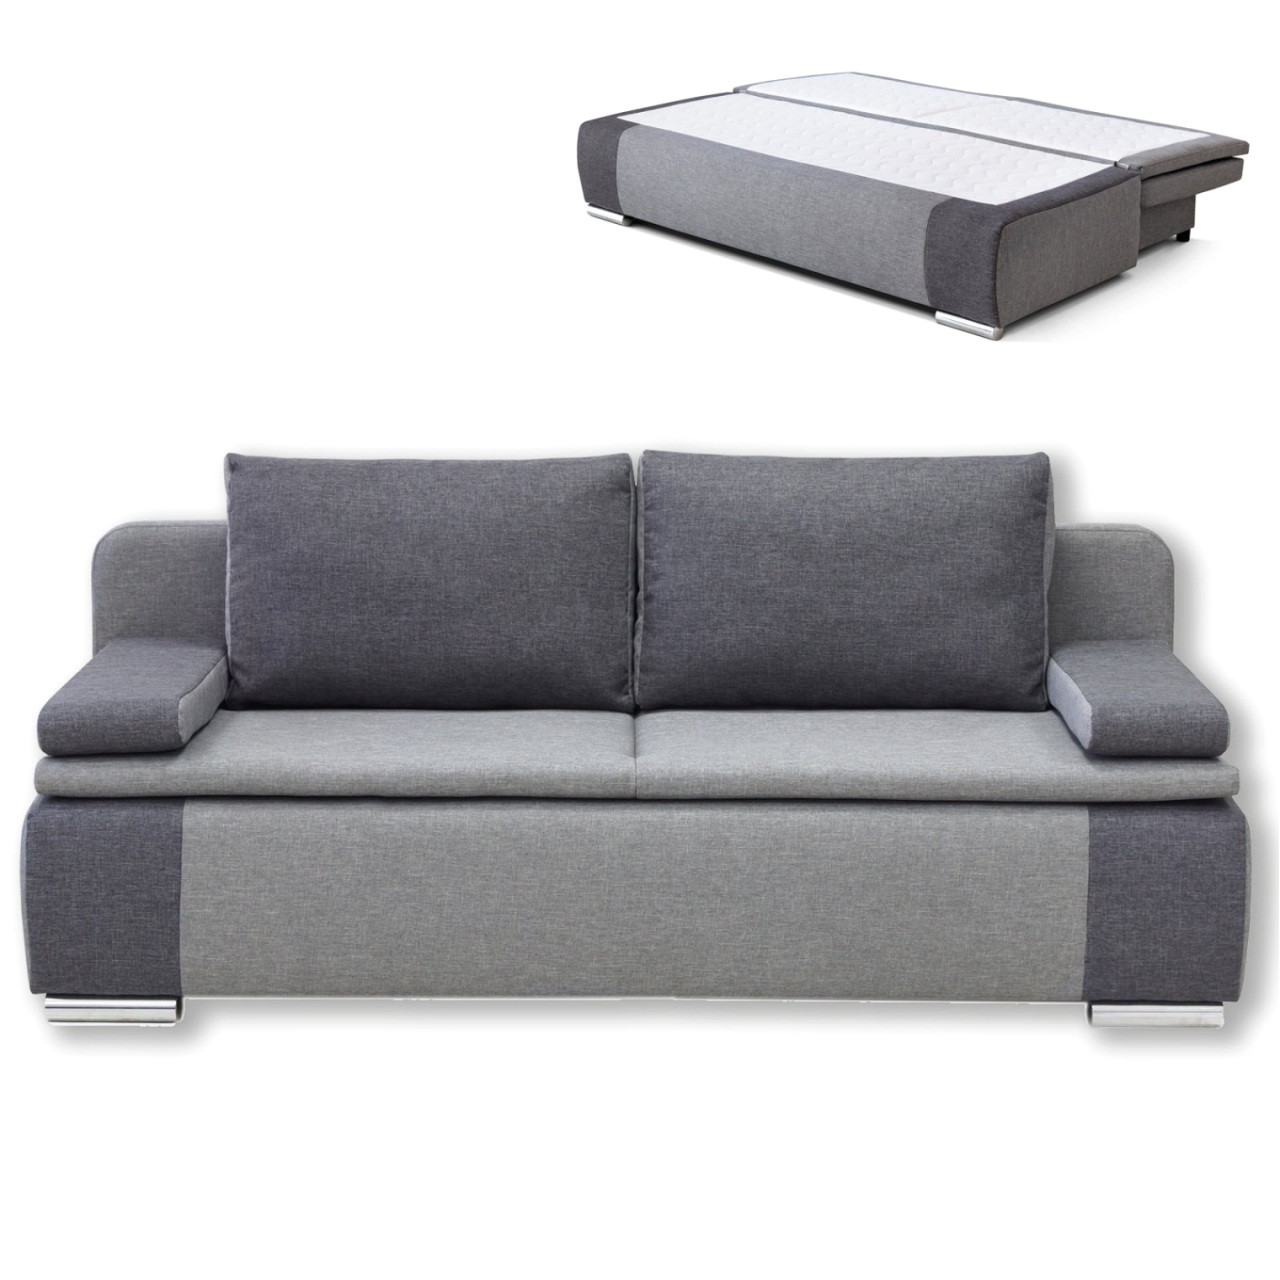 Serta Meredith Dream Convertible sofa Firm sofa Bed New Leather sofa atlanta Ga Unique Elegant sofa Bed